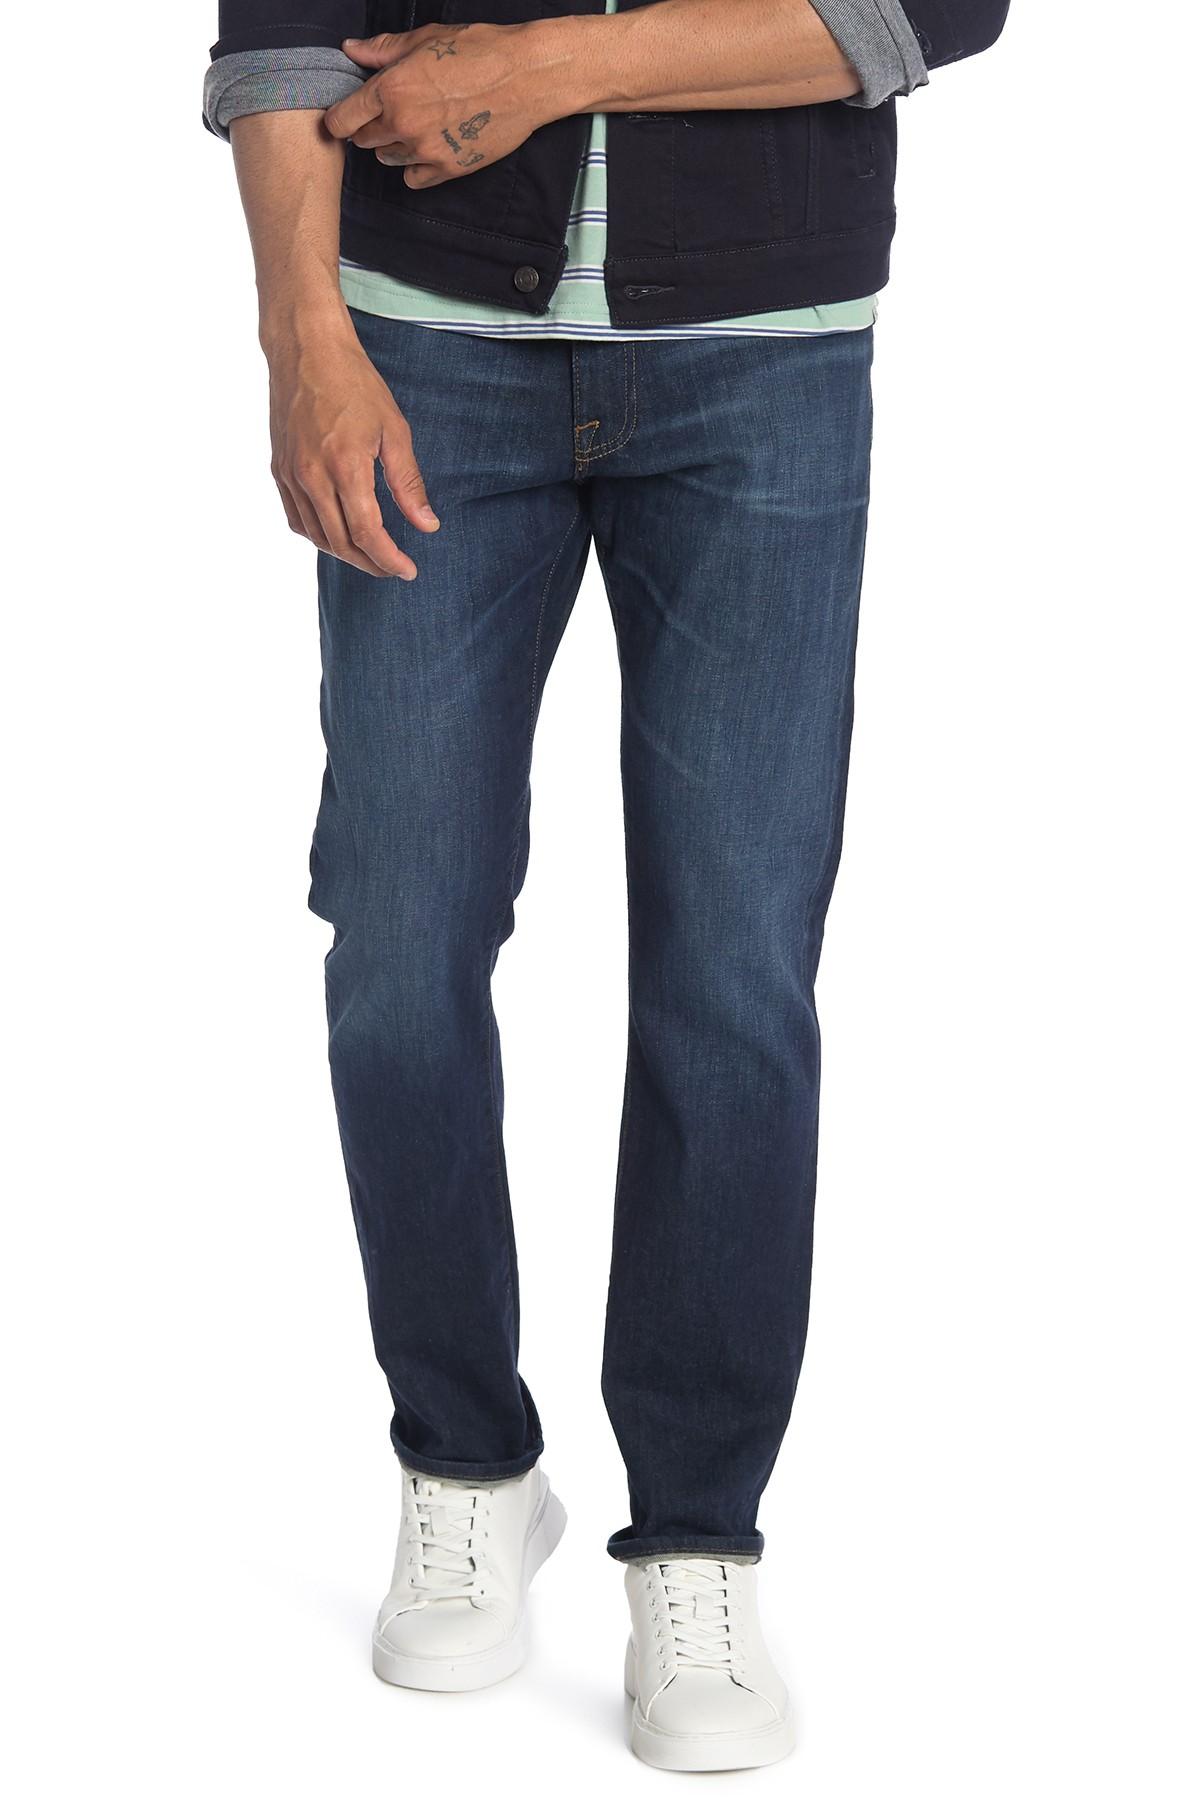 Lucky Brand Denim 410 Athletic Slim Fit Jeans - 30-34